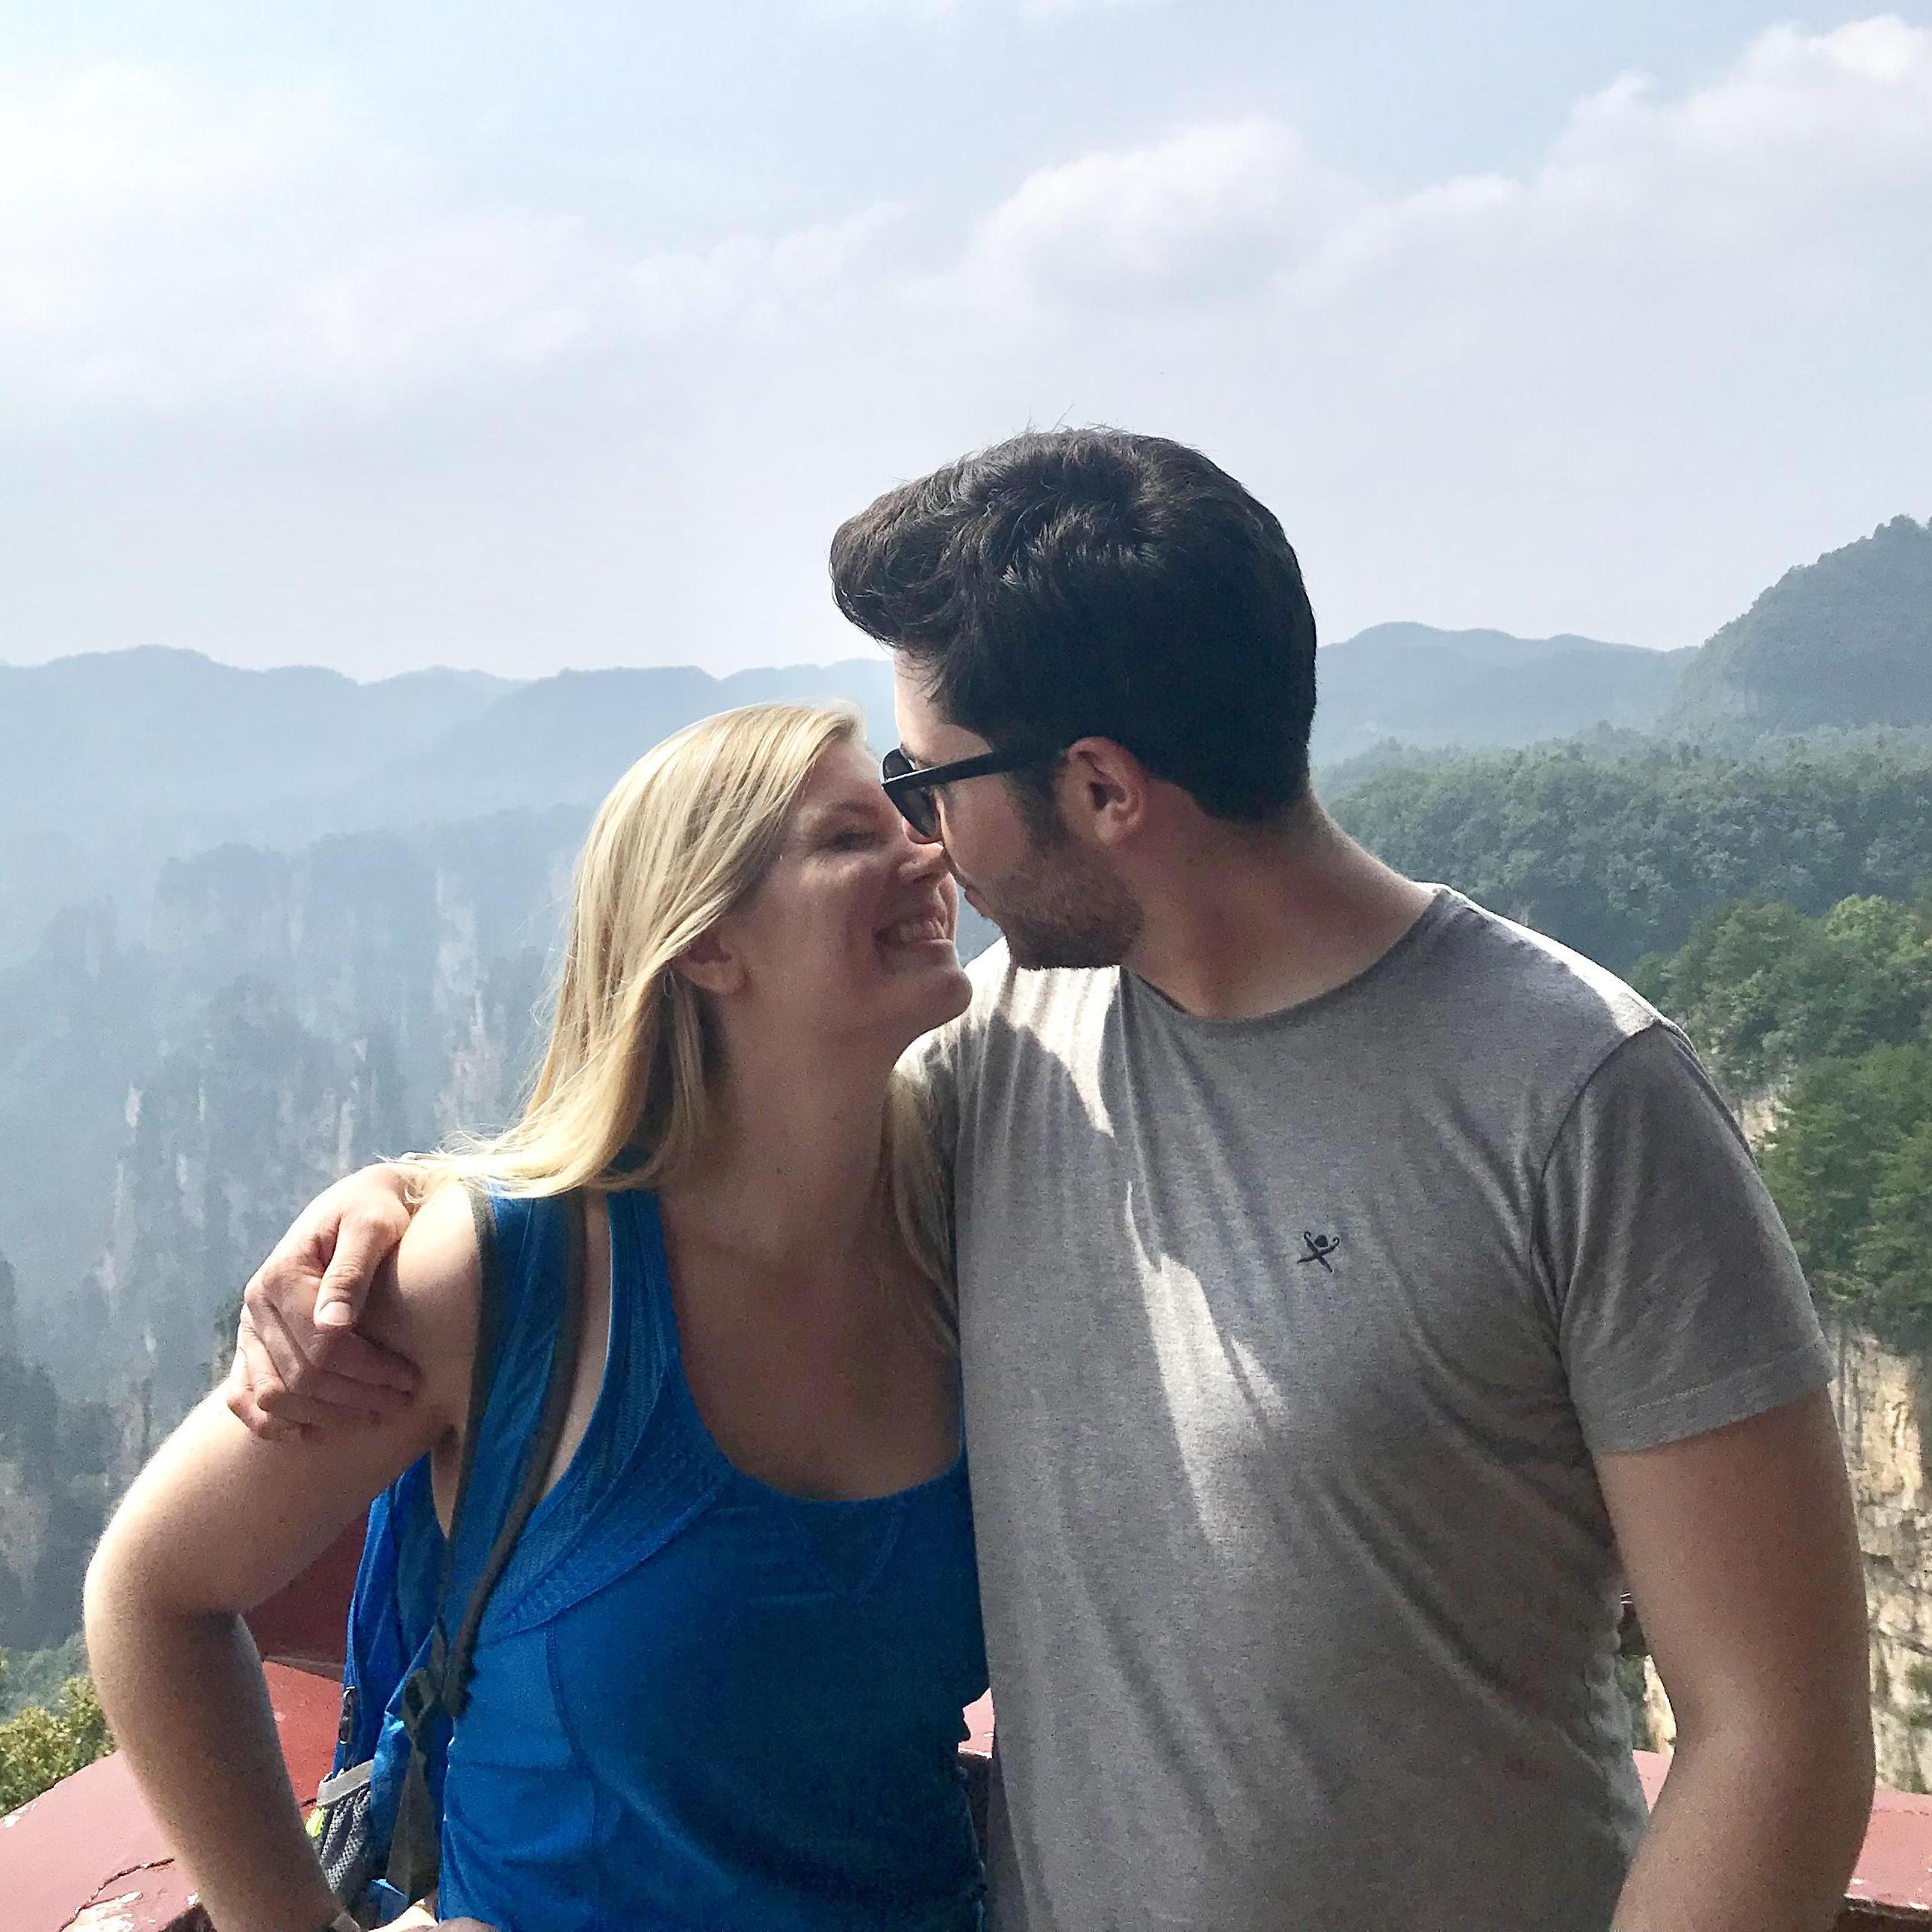 Adventuring through China to the "Avatar" mountains in Zhangjiajie
2019